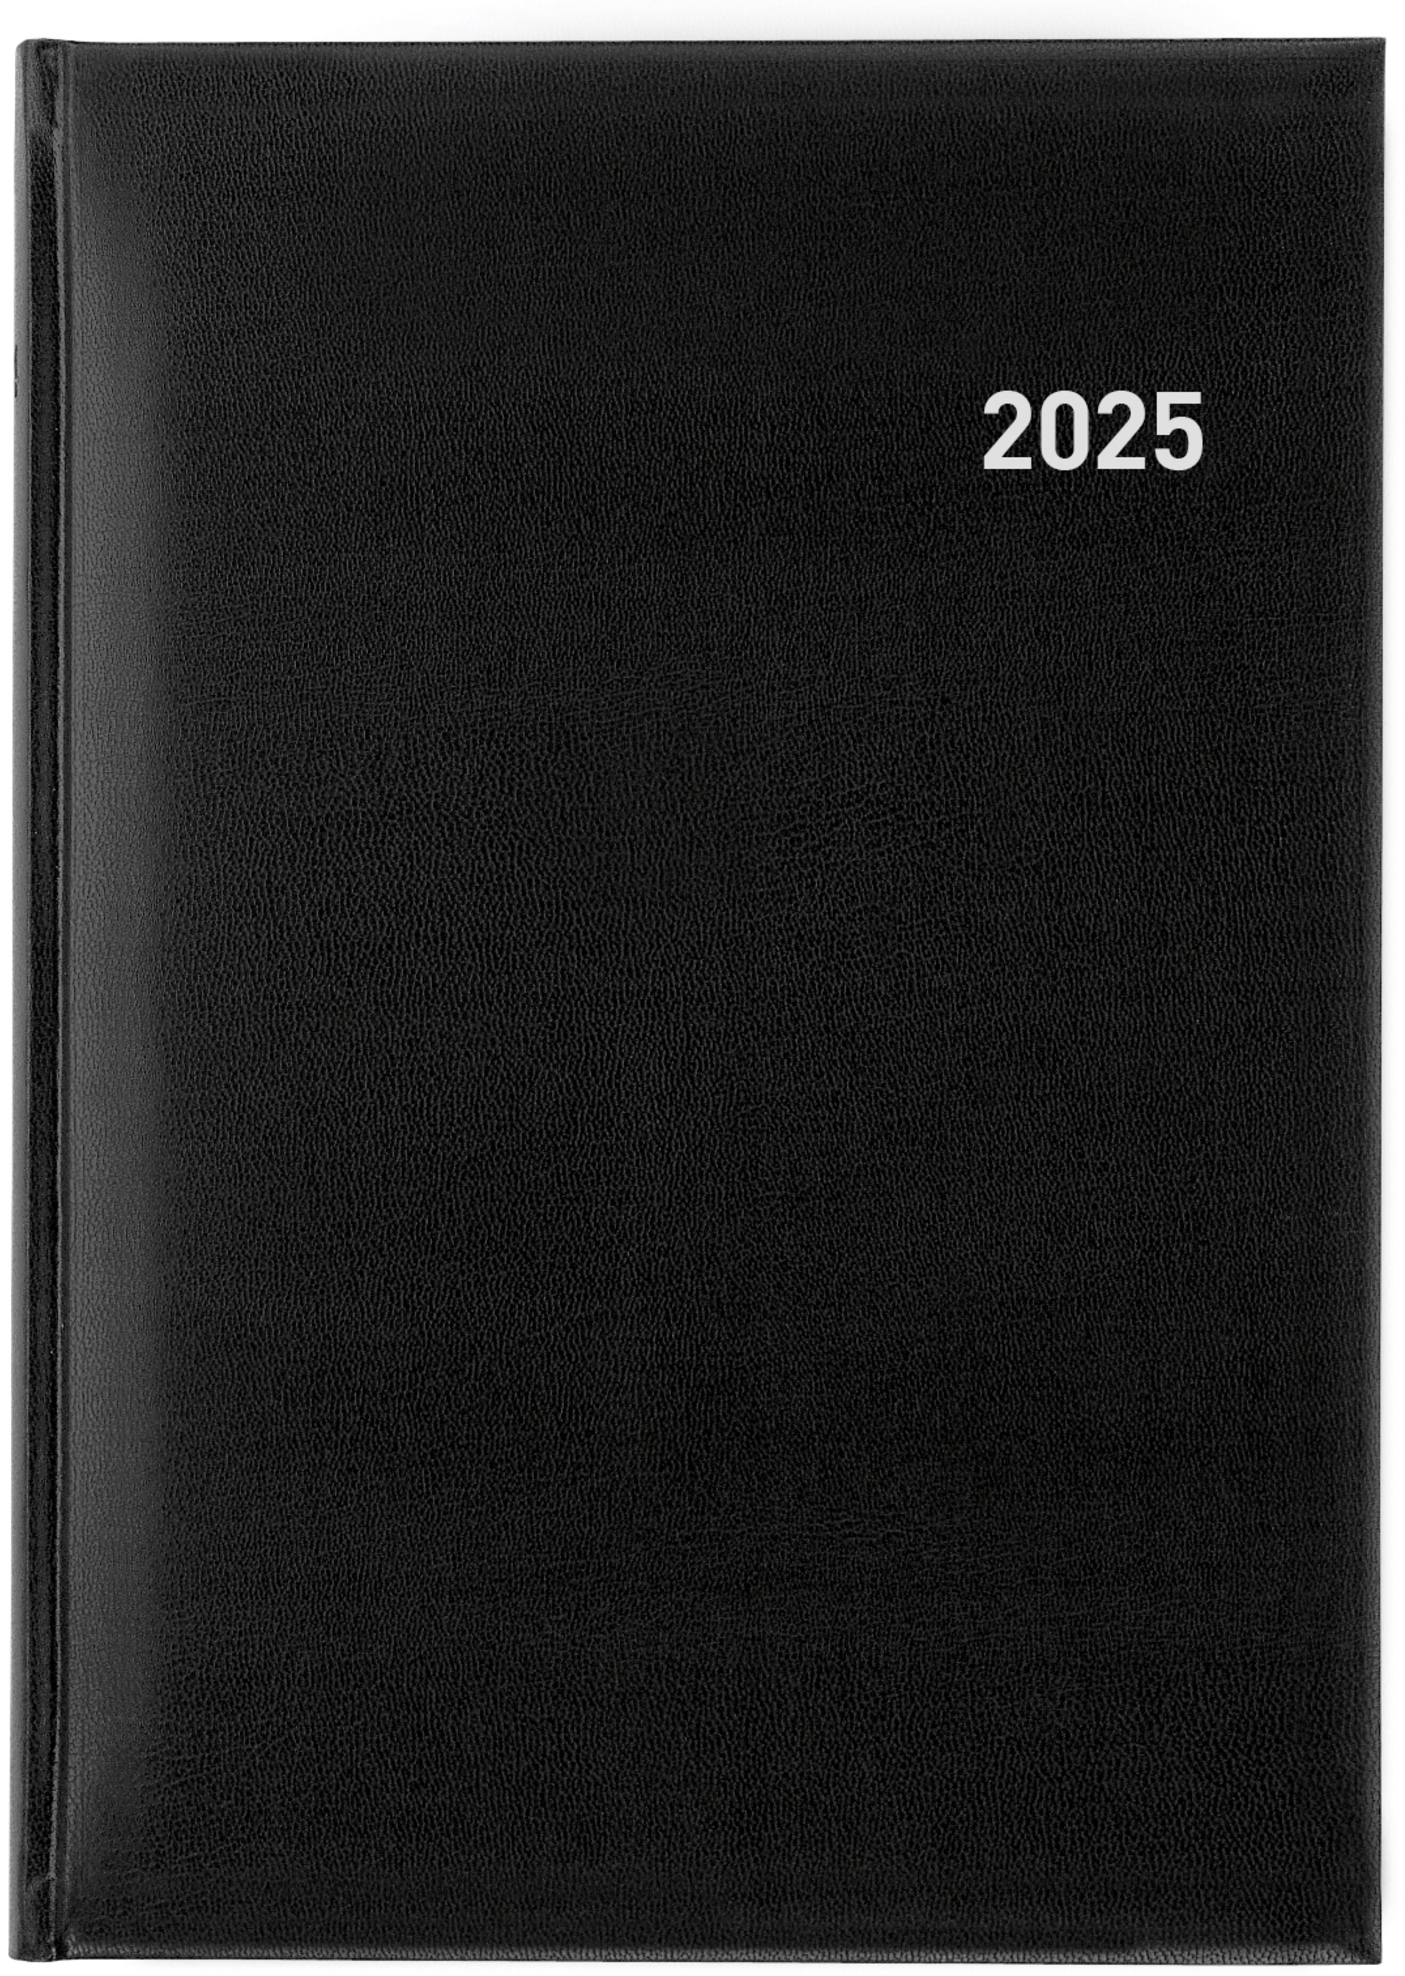 BIELLA Agenda Quattro 2025 803410020025 1J/1P noir ML 21x29.7cm